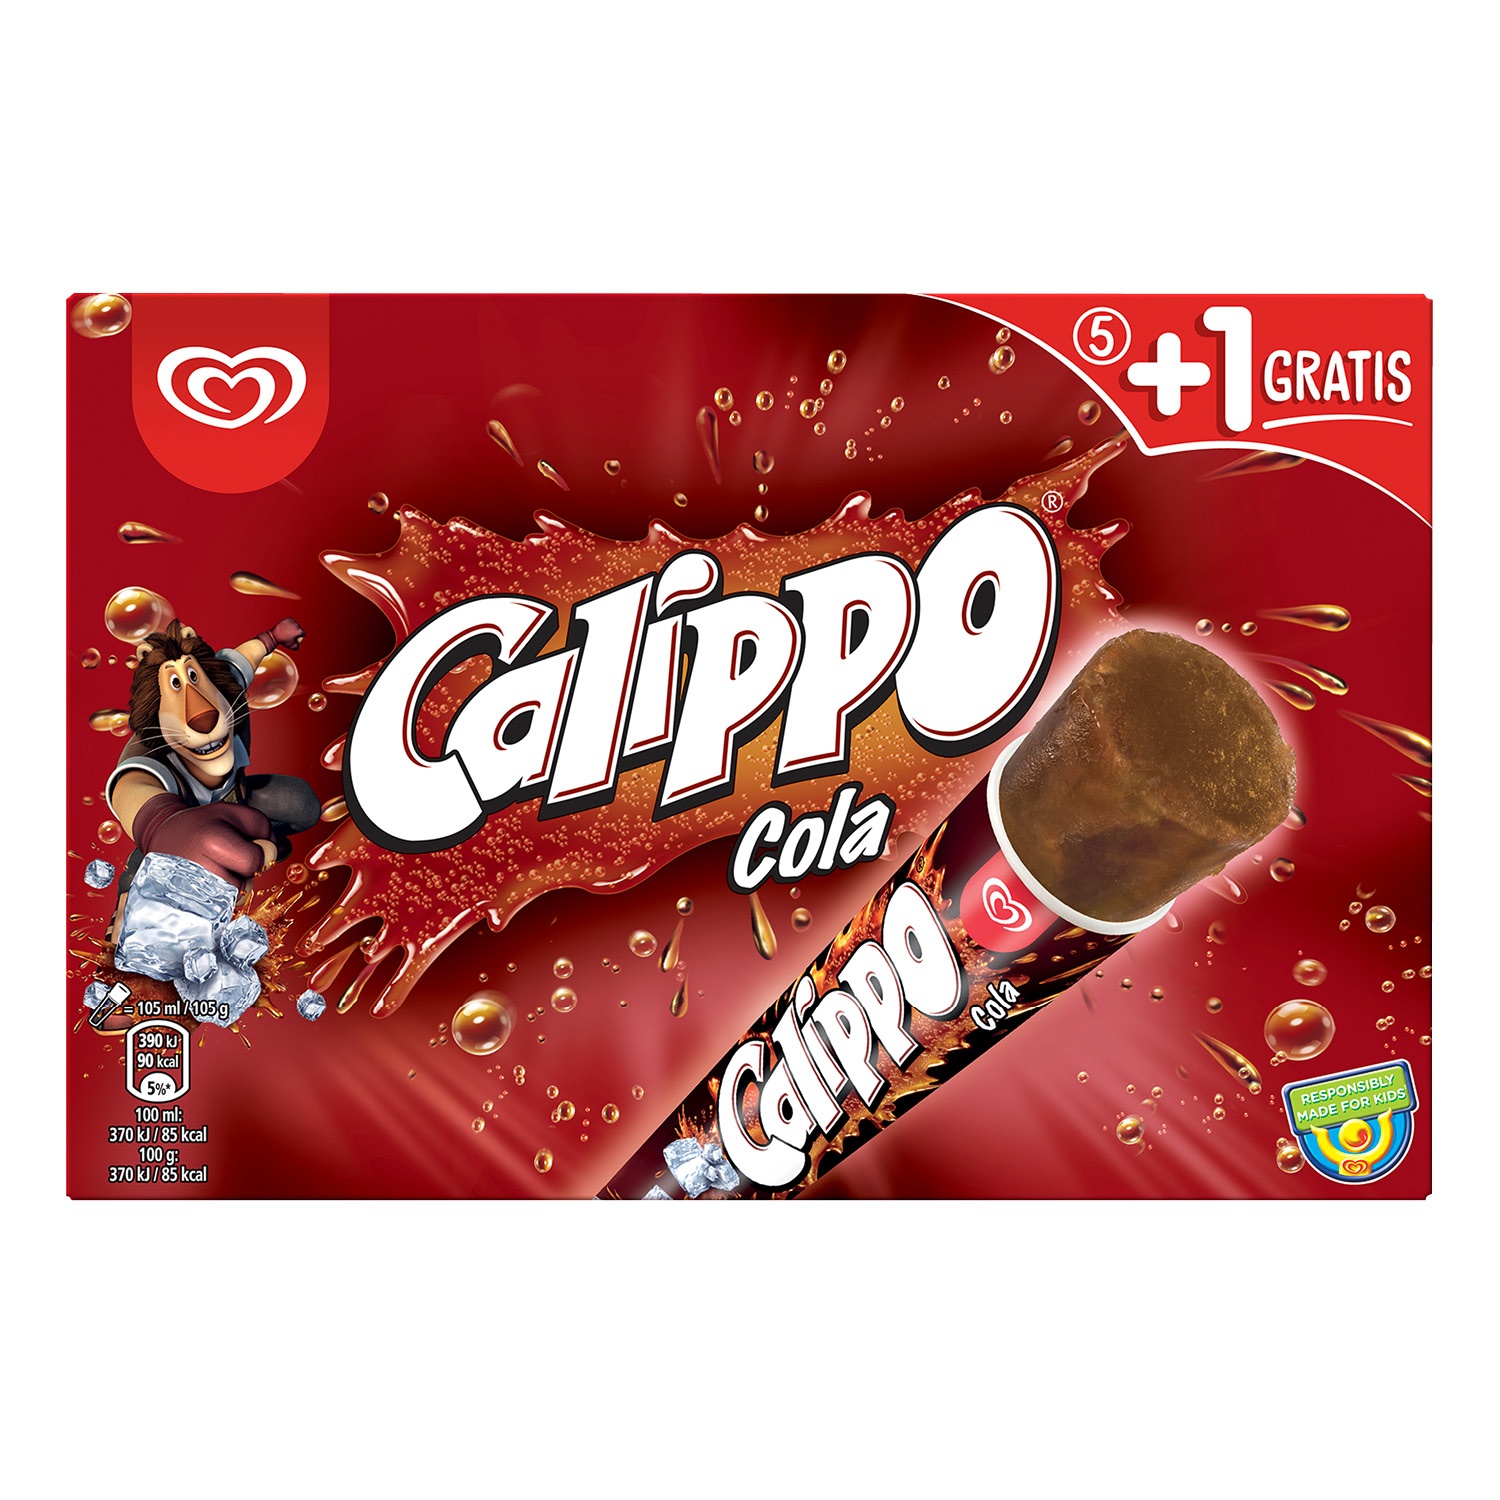 Calippo Cola 5 + 1 gratis 630 ml